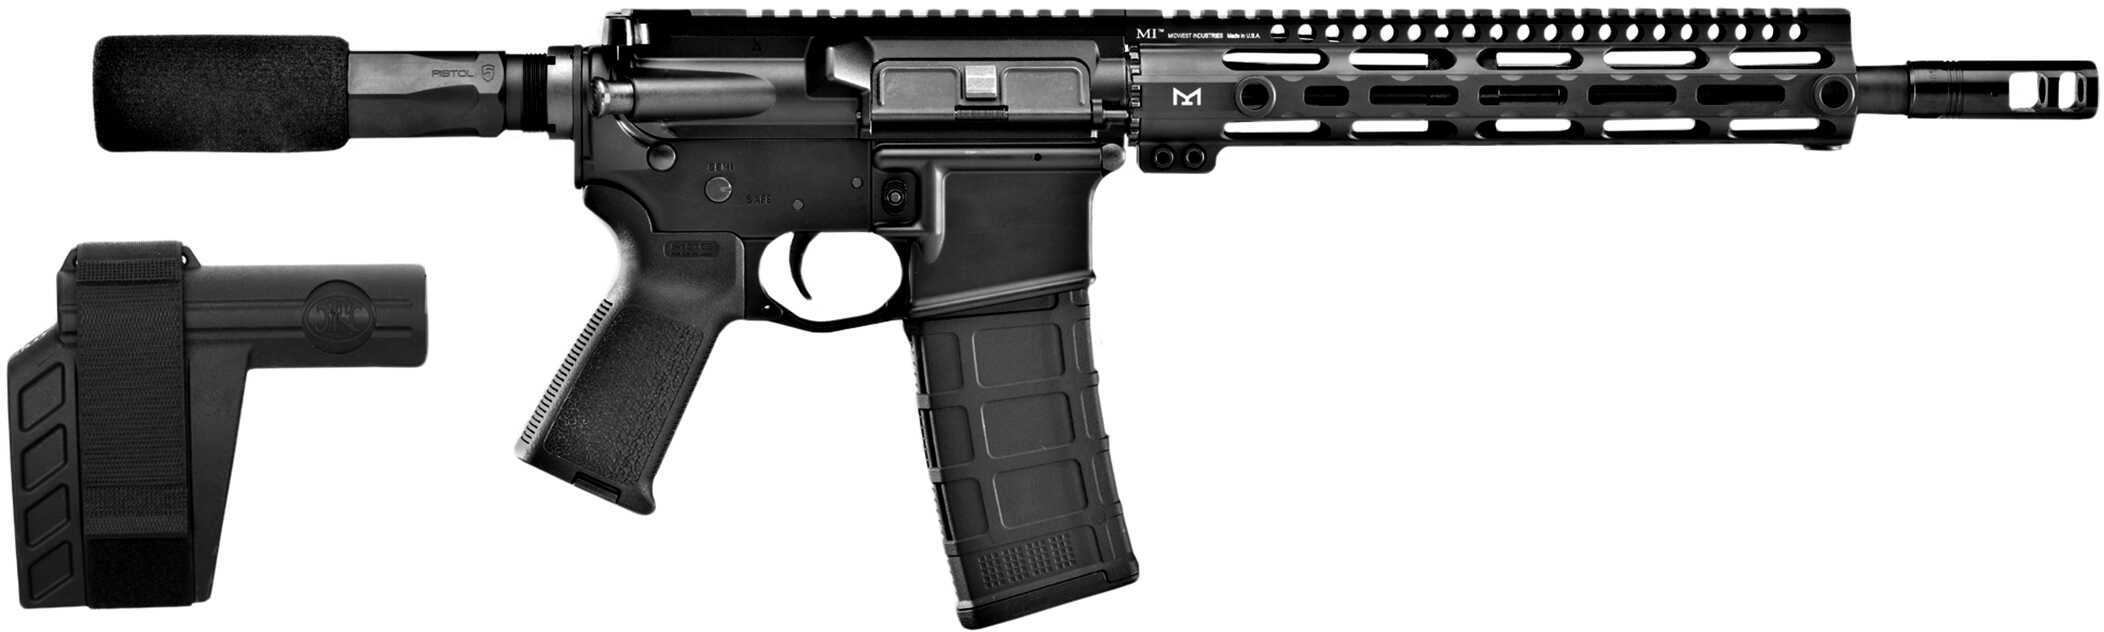 FN Semi-Auto Pistol FN15 300 Blackout 12" Barrel Finish